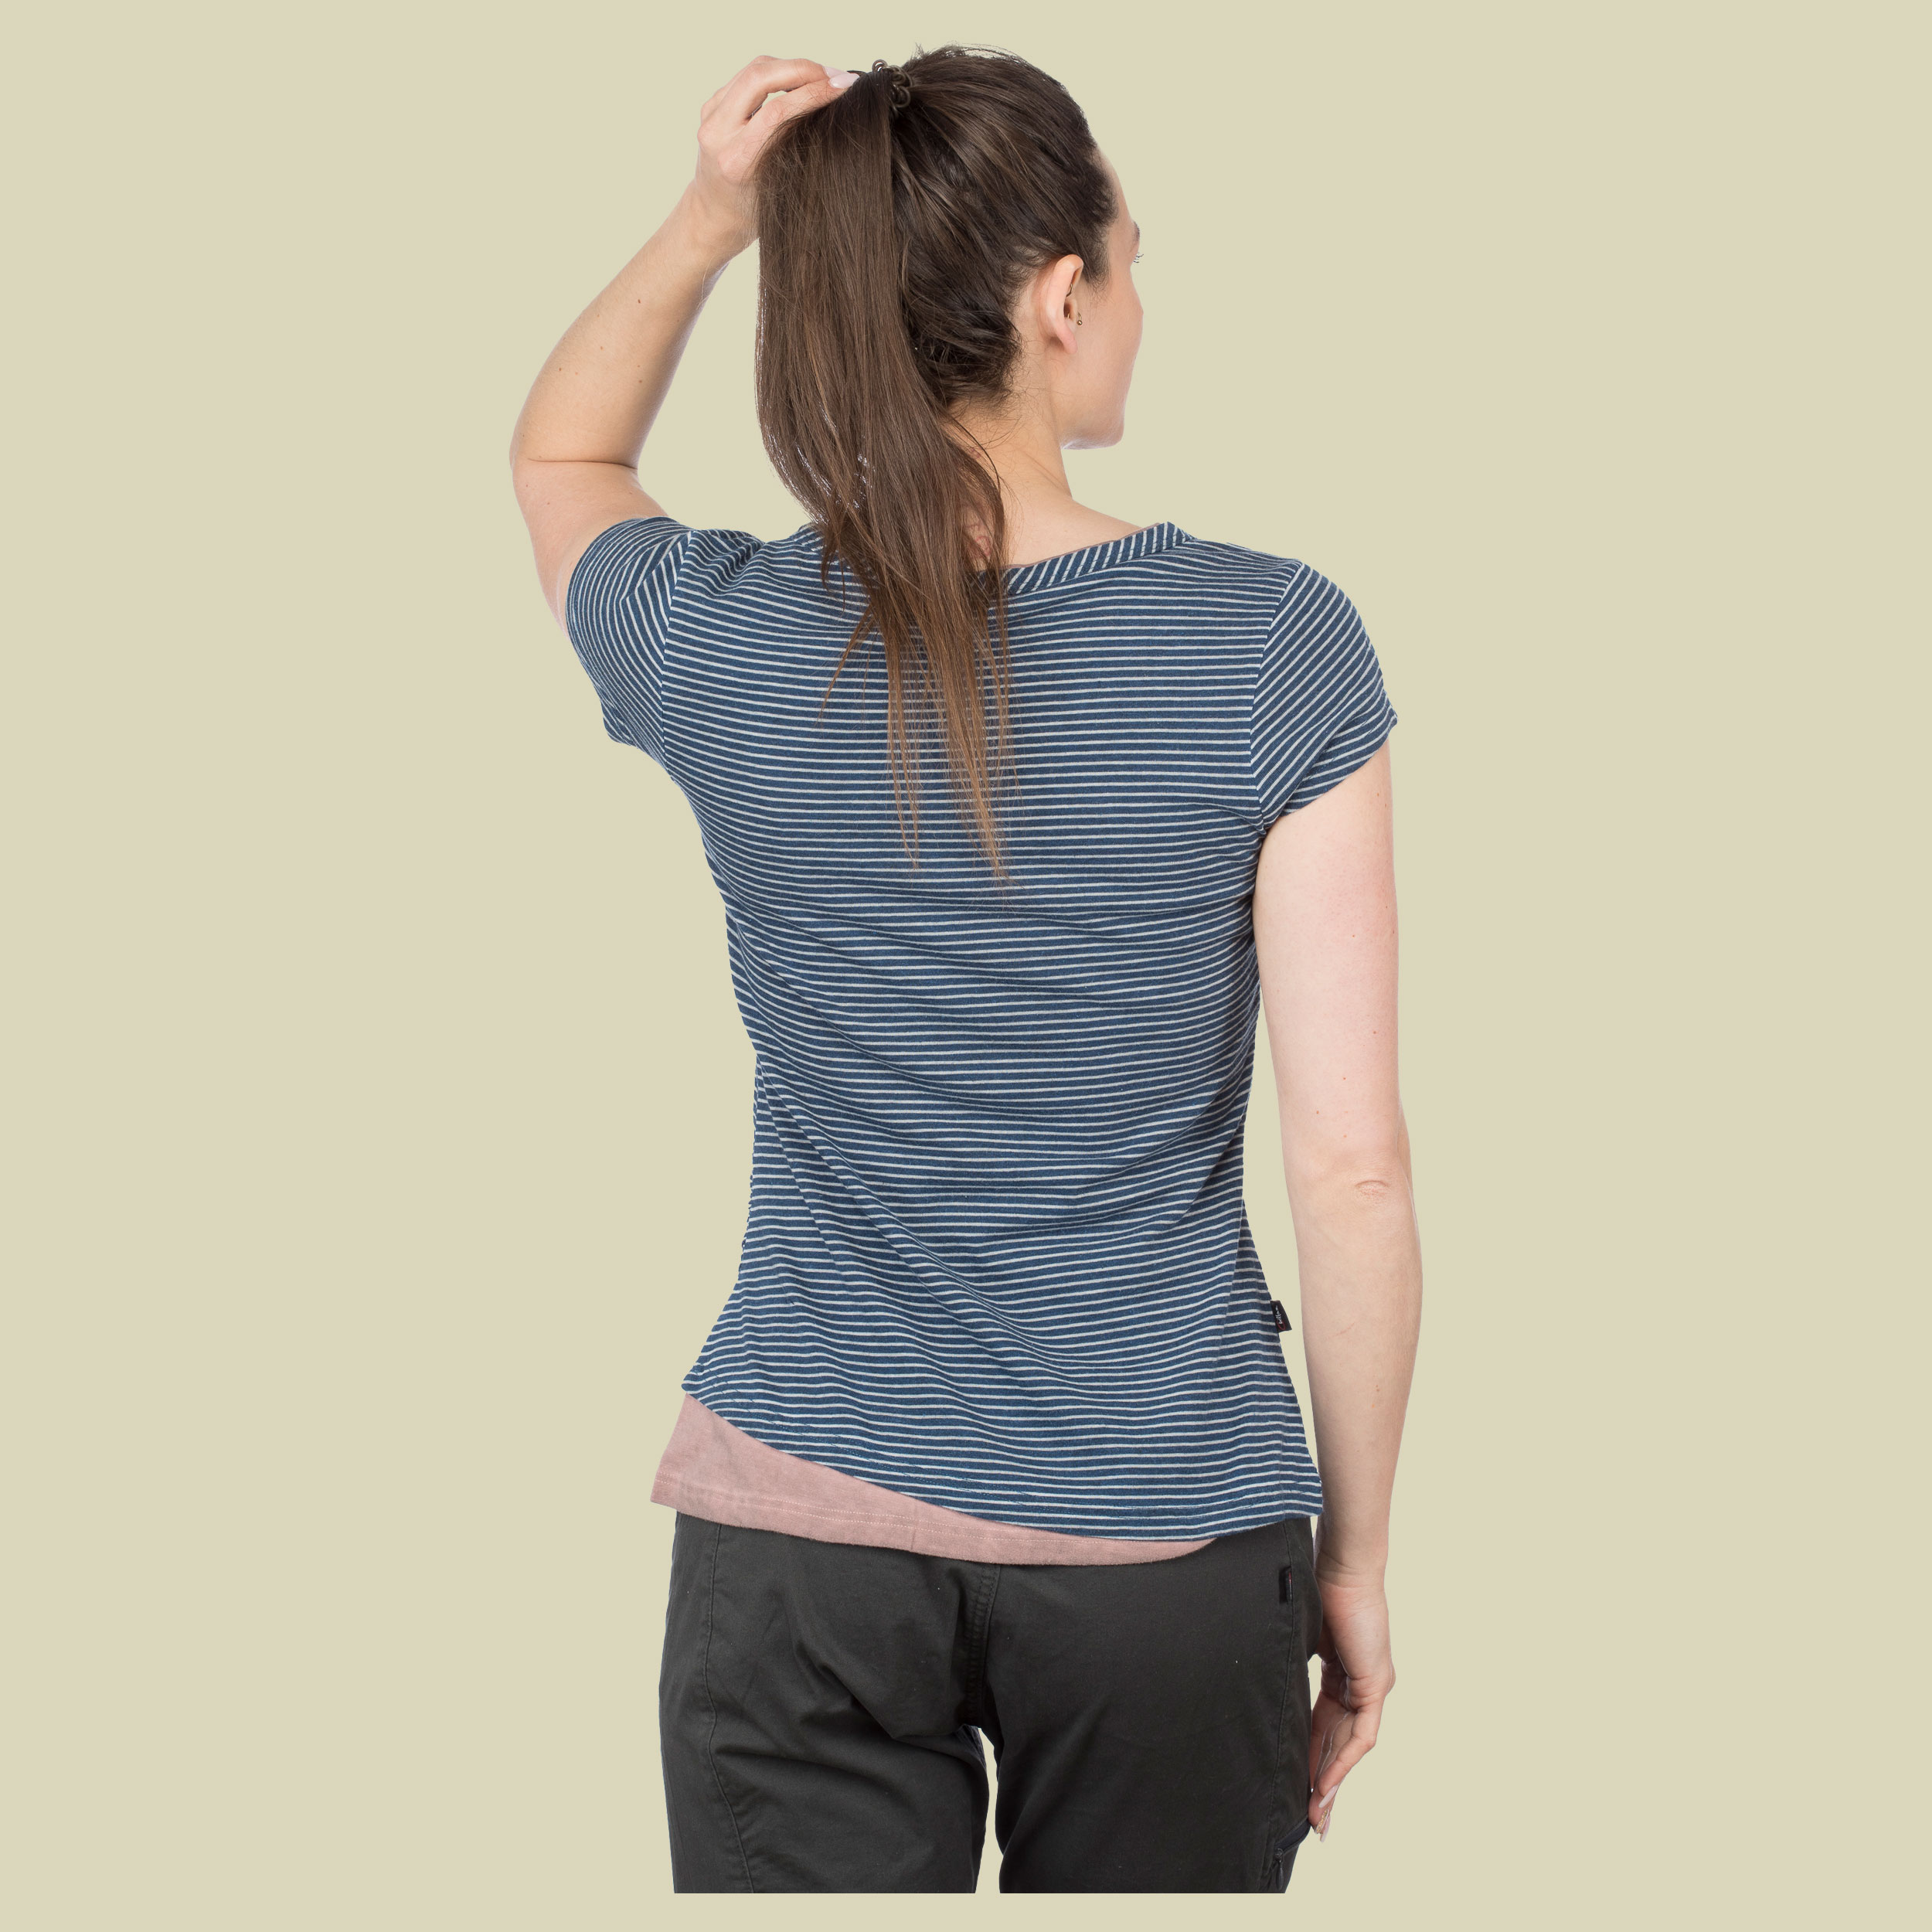 Fancy Little Dot T-Shirt Women Größe 36 Farbe indigo blue stripes washed